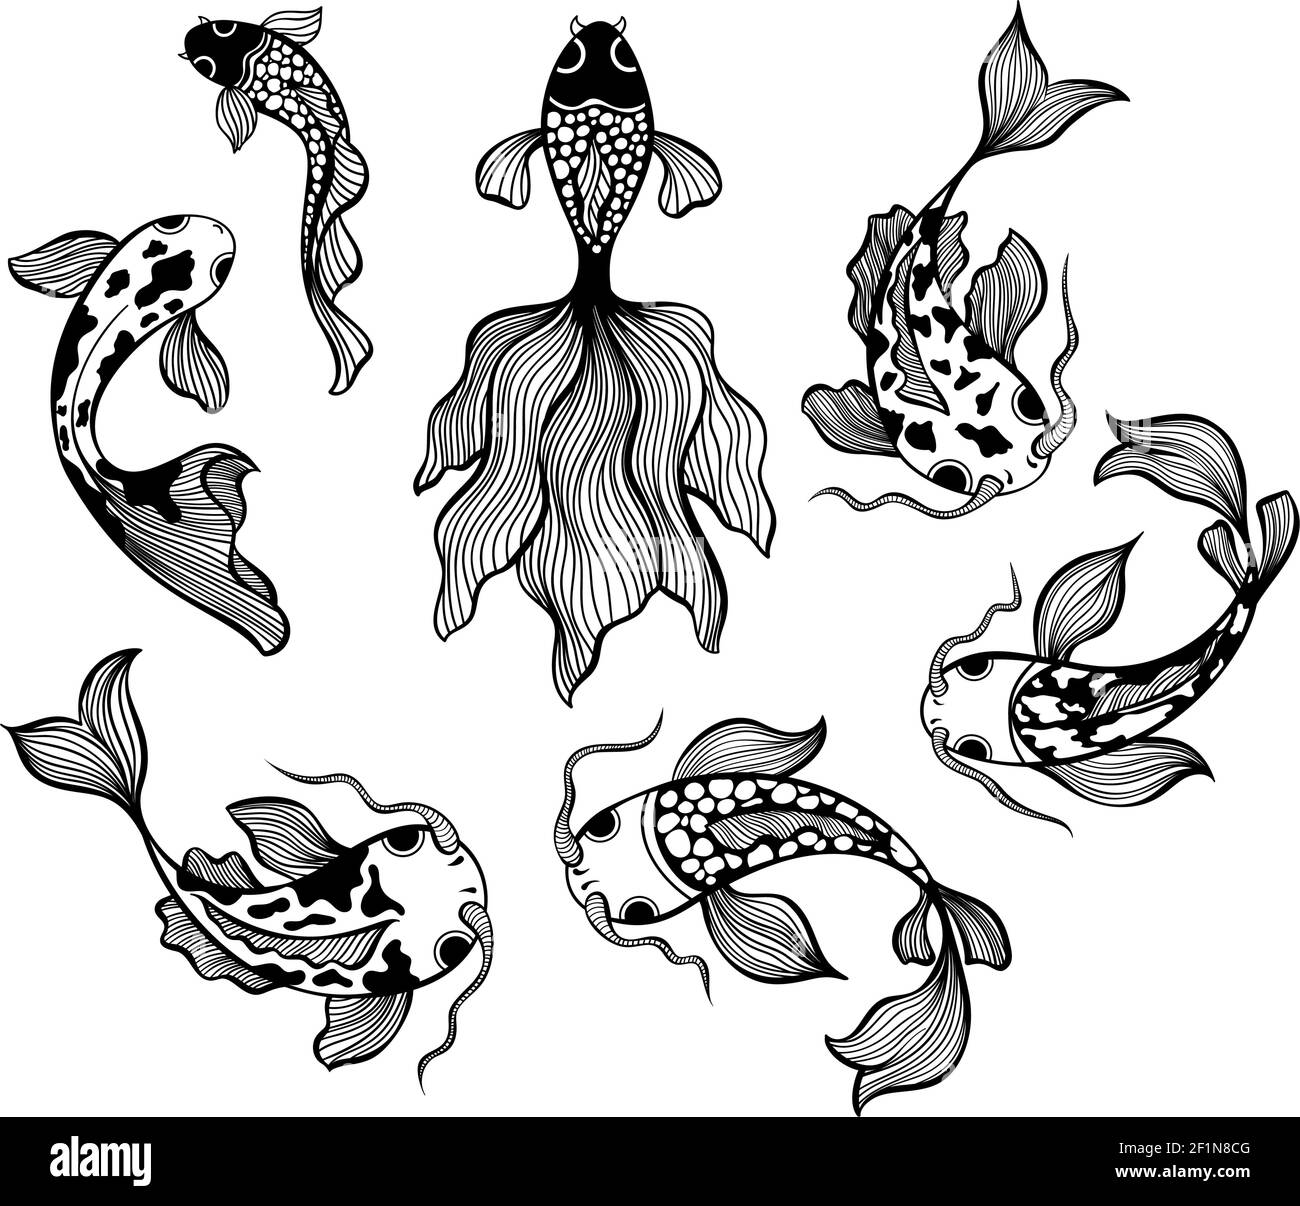 Japanese fish set, carp koi line drawing vector illustrations Stock Vector